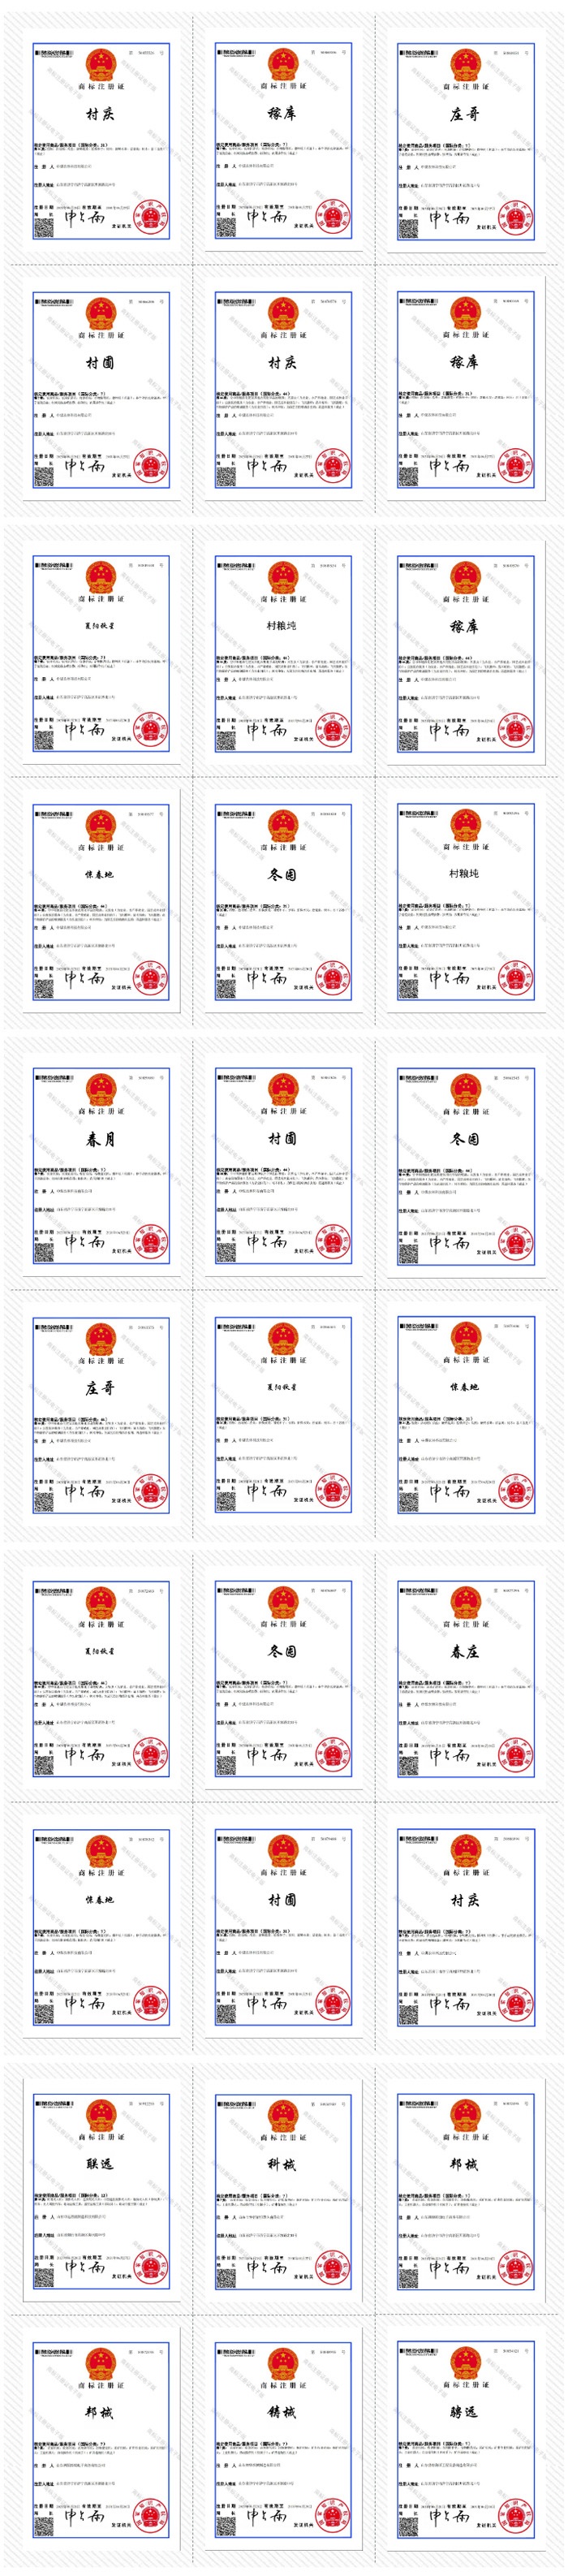 Congratulations To Shandong Tiandun For Obtaining 30 National Trademark Registration Certificates